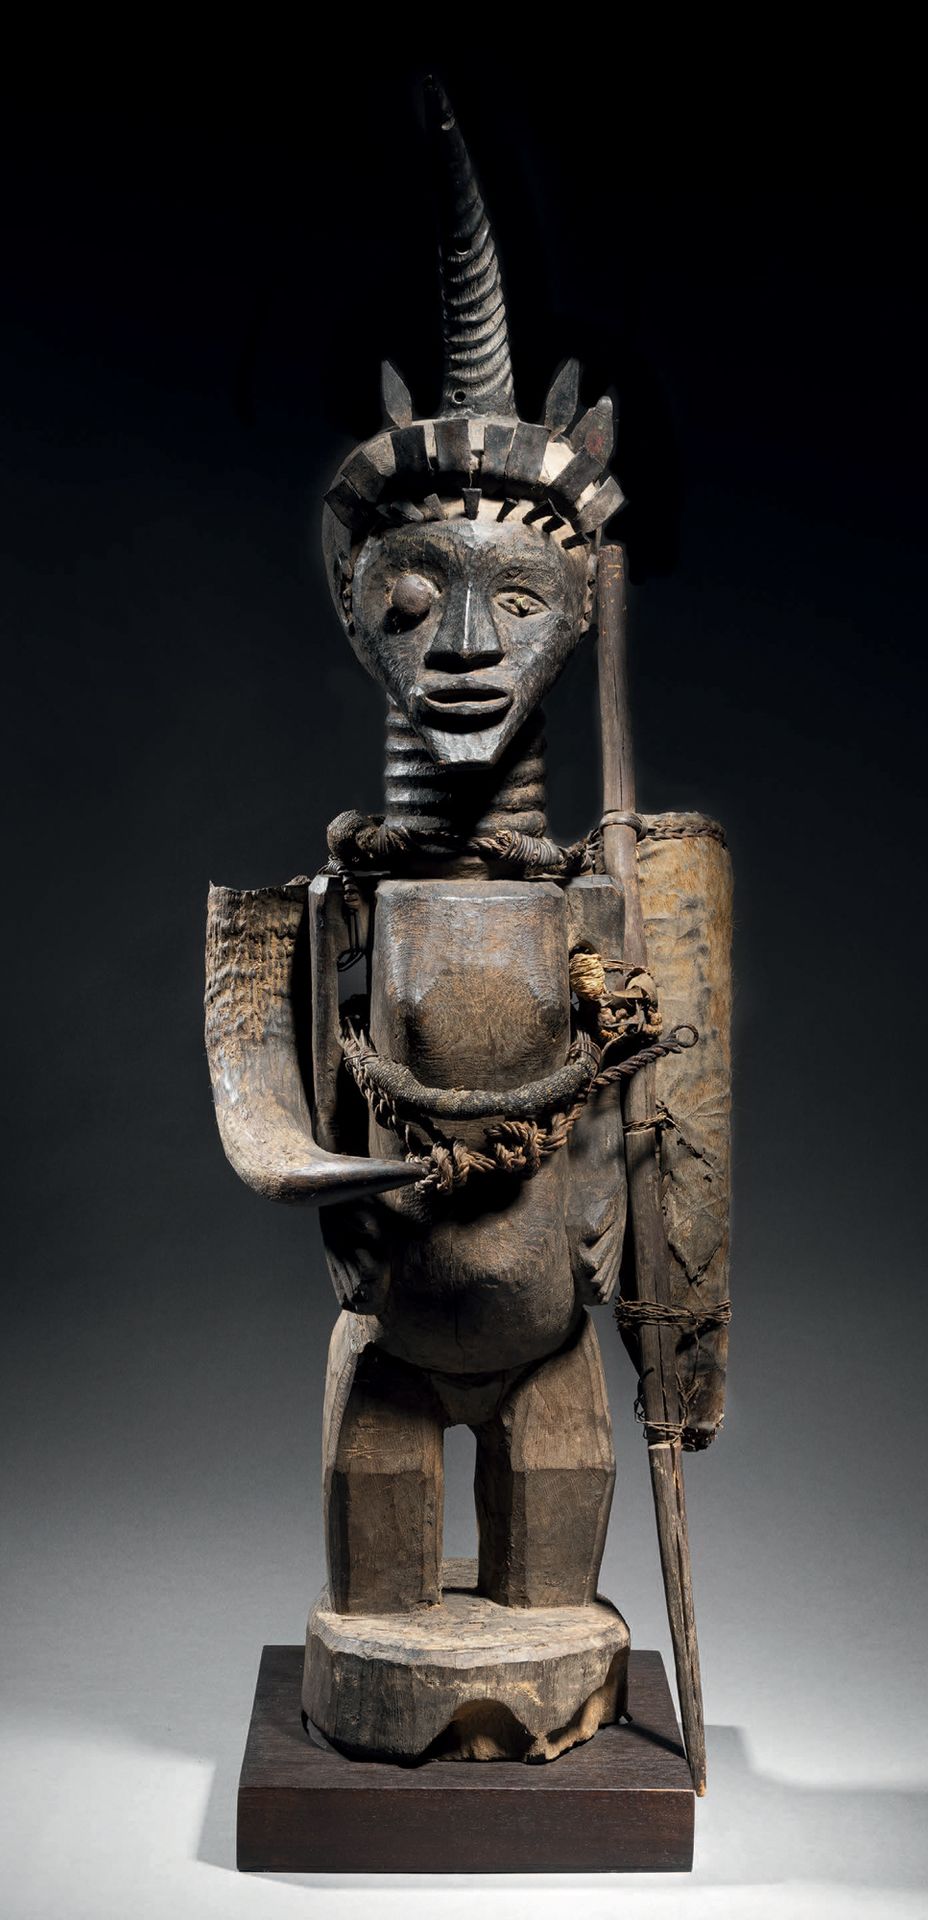 Null 宋耶雕像
刚果民主共和国
木头，金属，角，皮革，植物纤维 高92.5厘米
出处：
- Alain de Monbrison，巴黎
- Allan St&hellip;